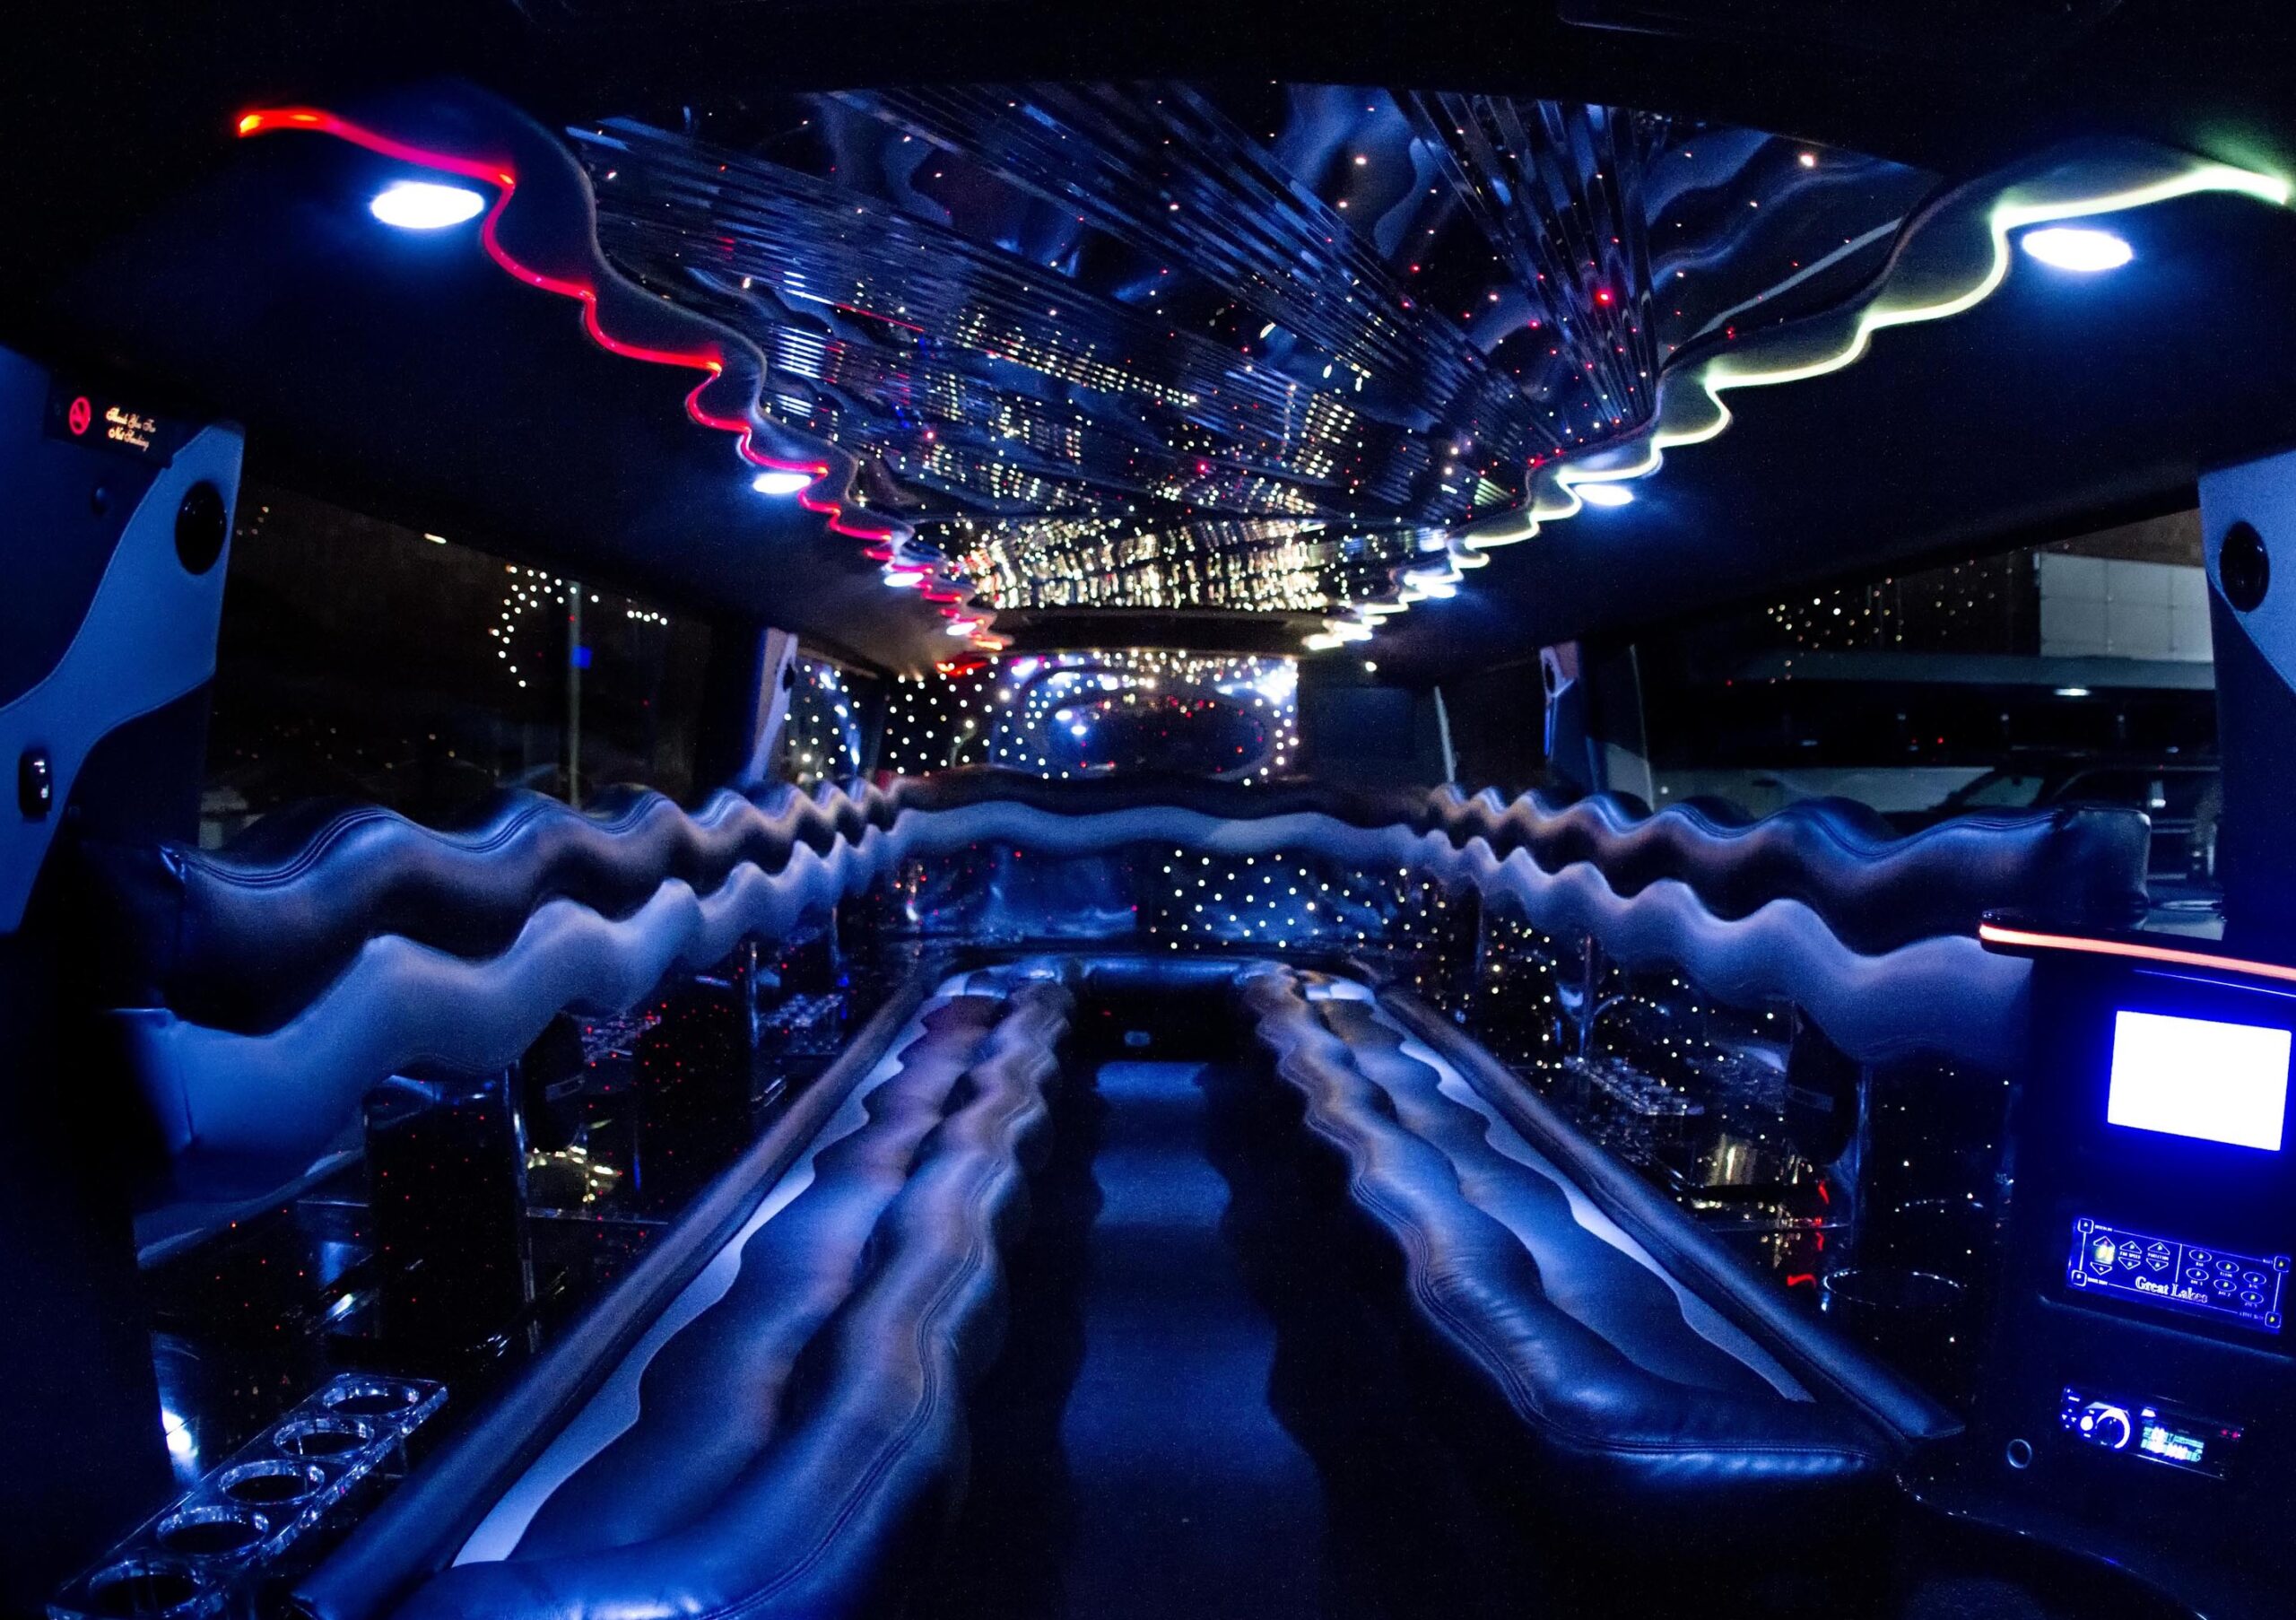 18 Passenger Party Bus Interior